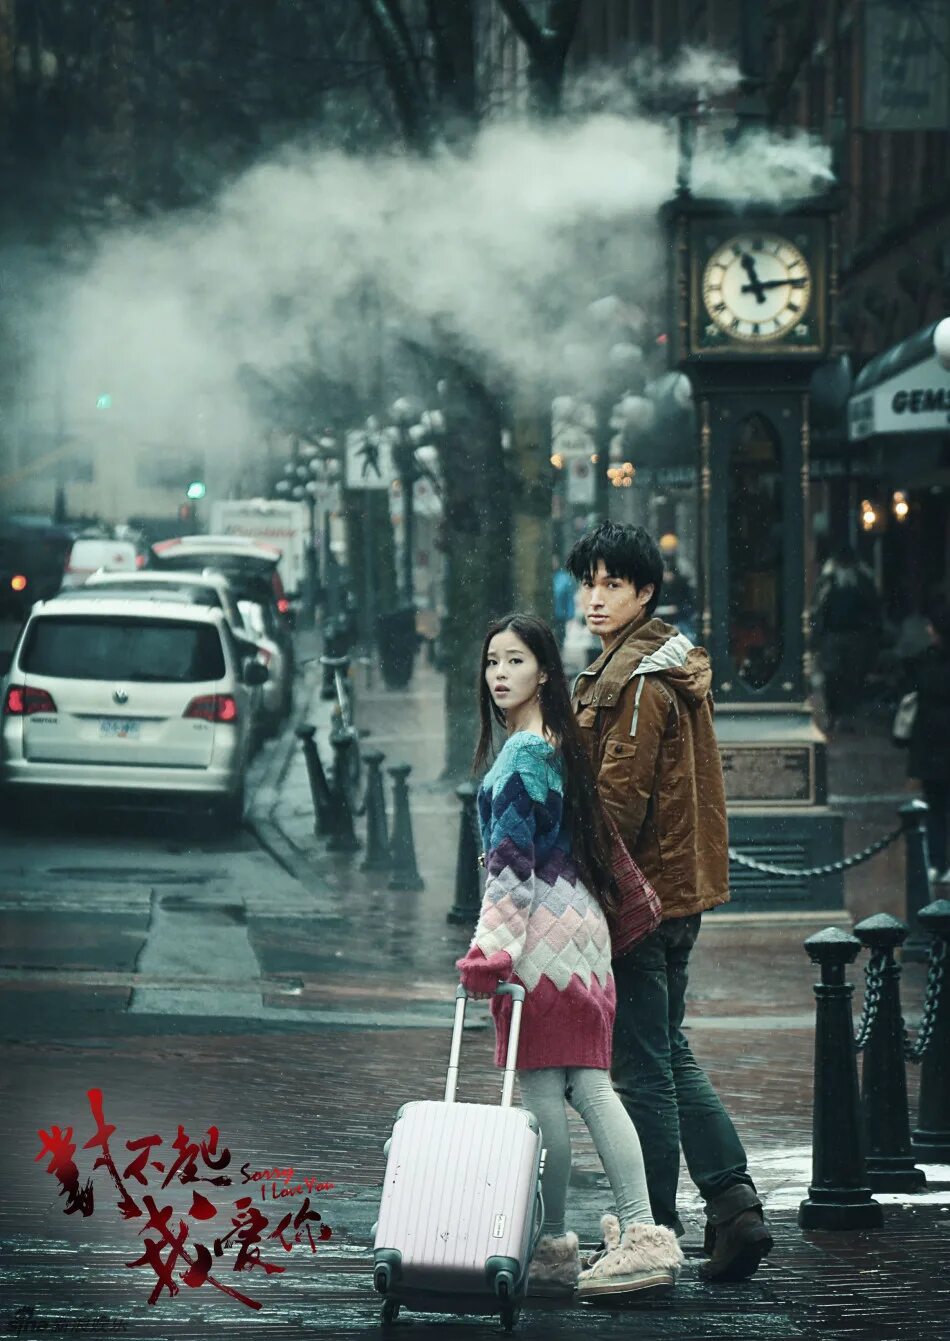 Korean dorama sayohat. Дорама i Love you. Драма «две женщины» (2010) Корея.